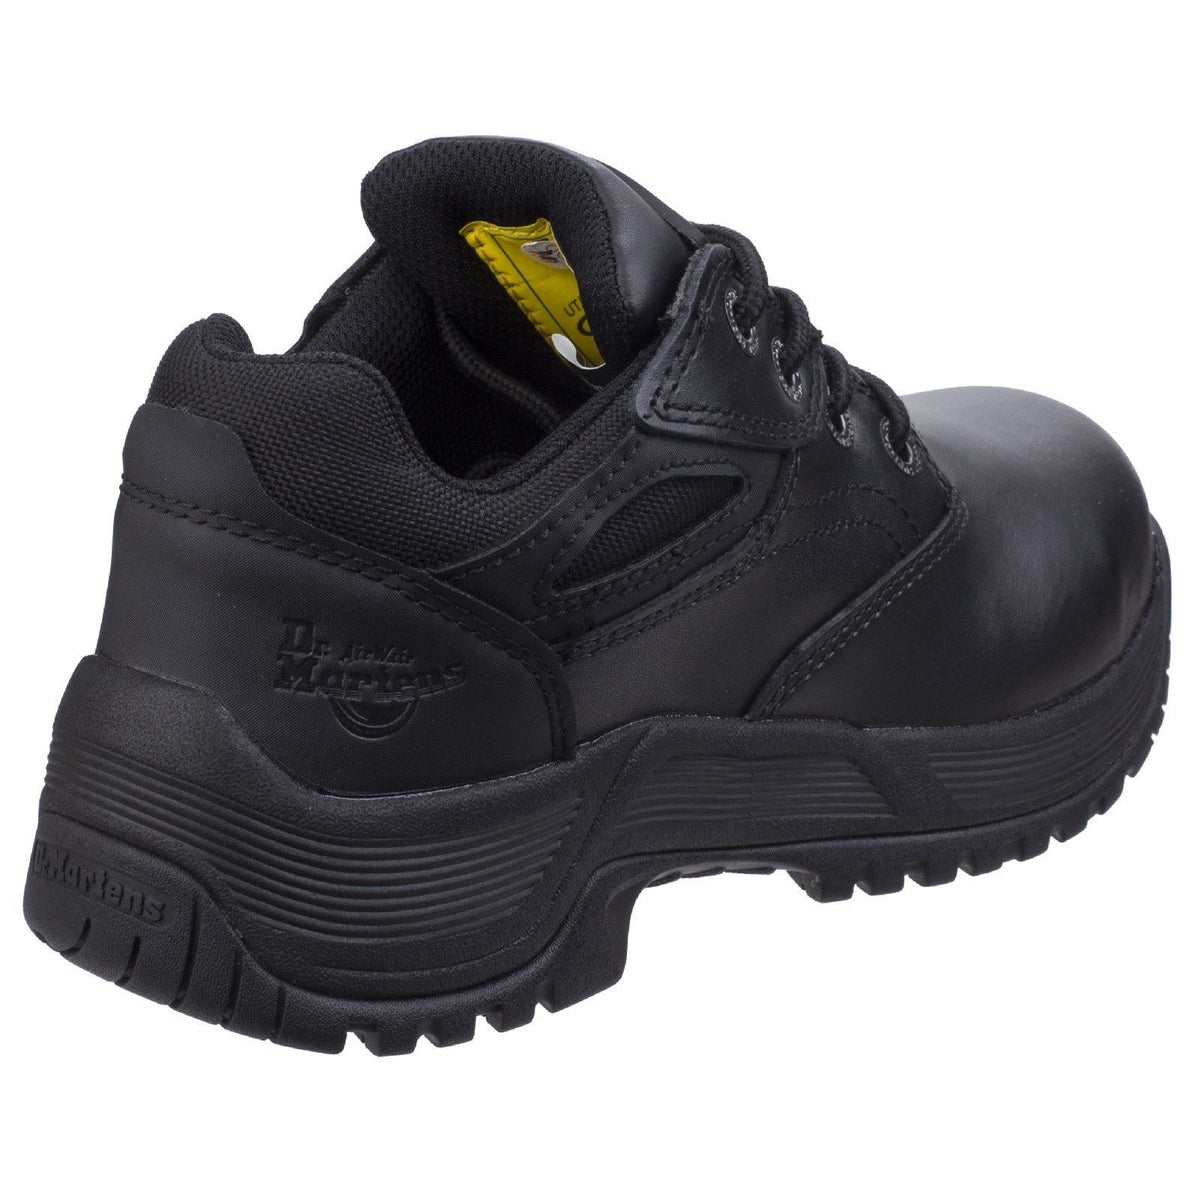 Dr Martens Calvert Steel Toe Safety Shoes